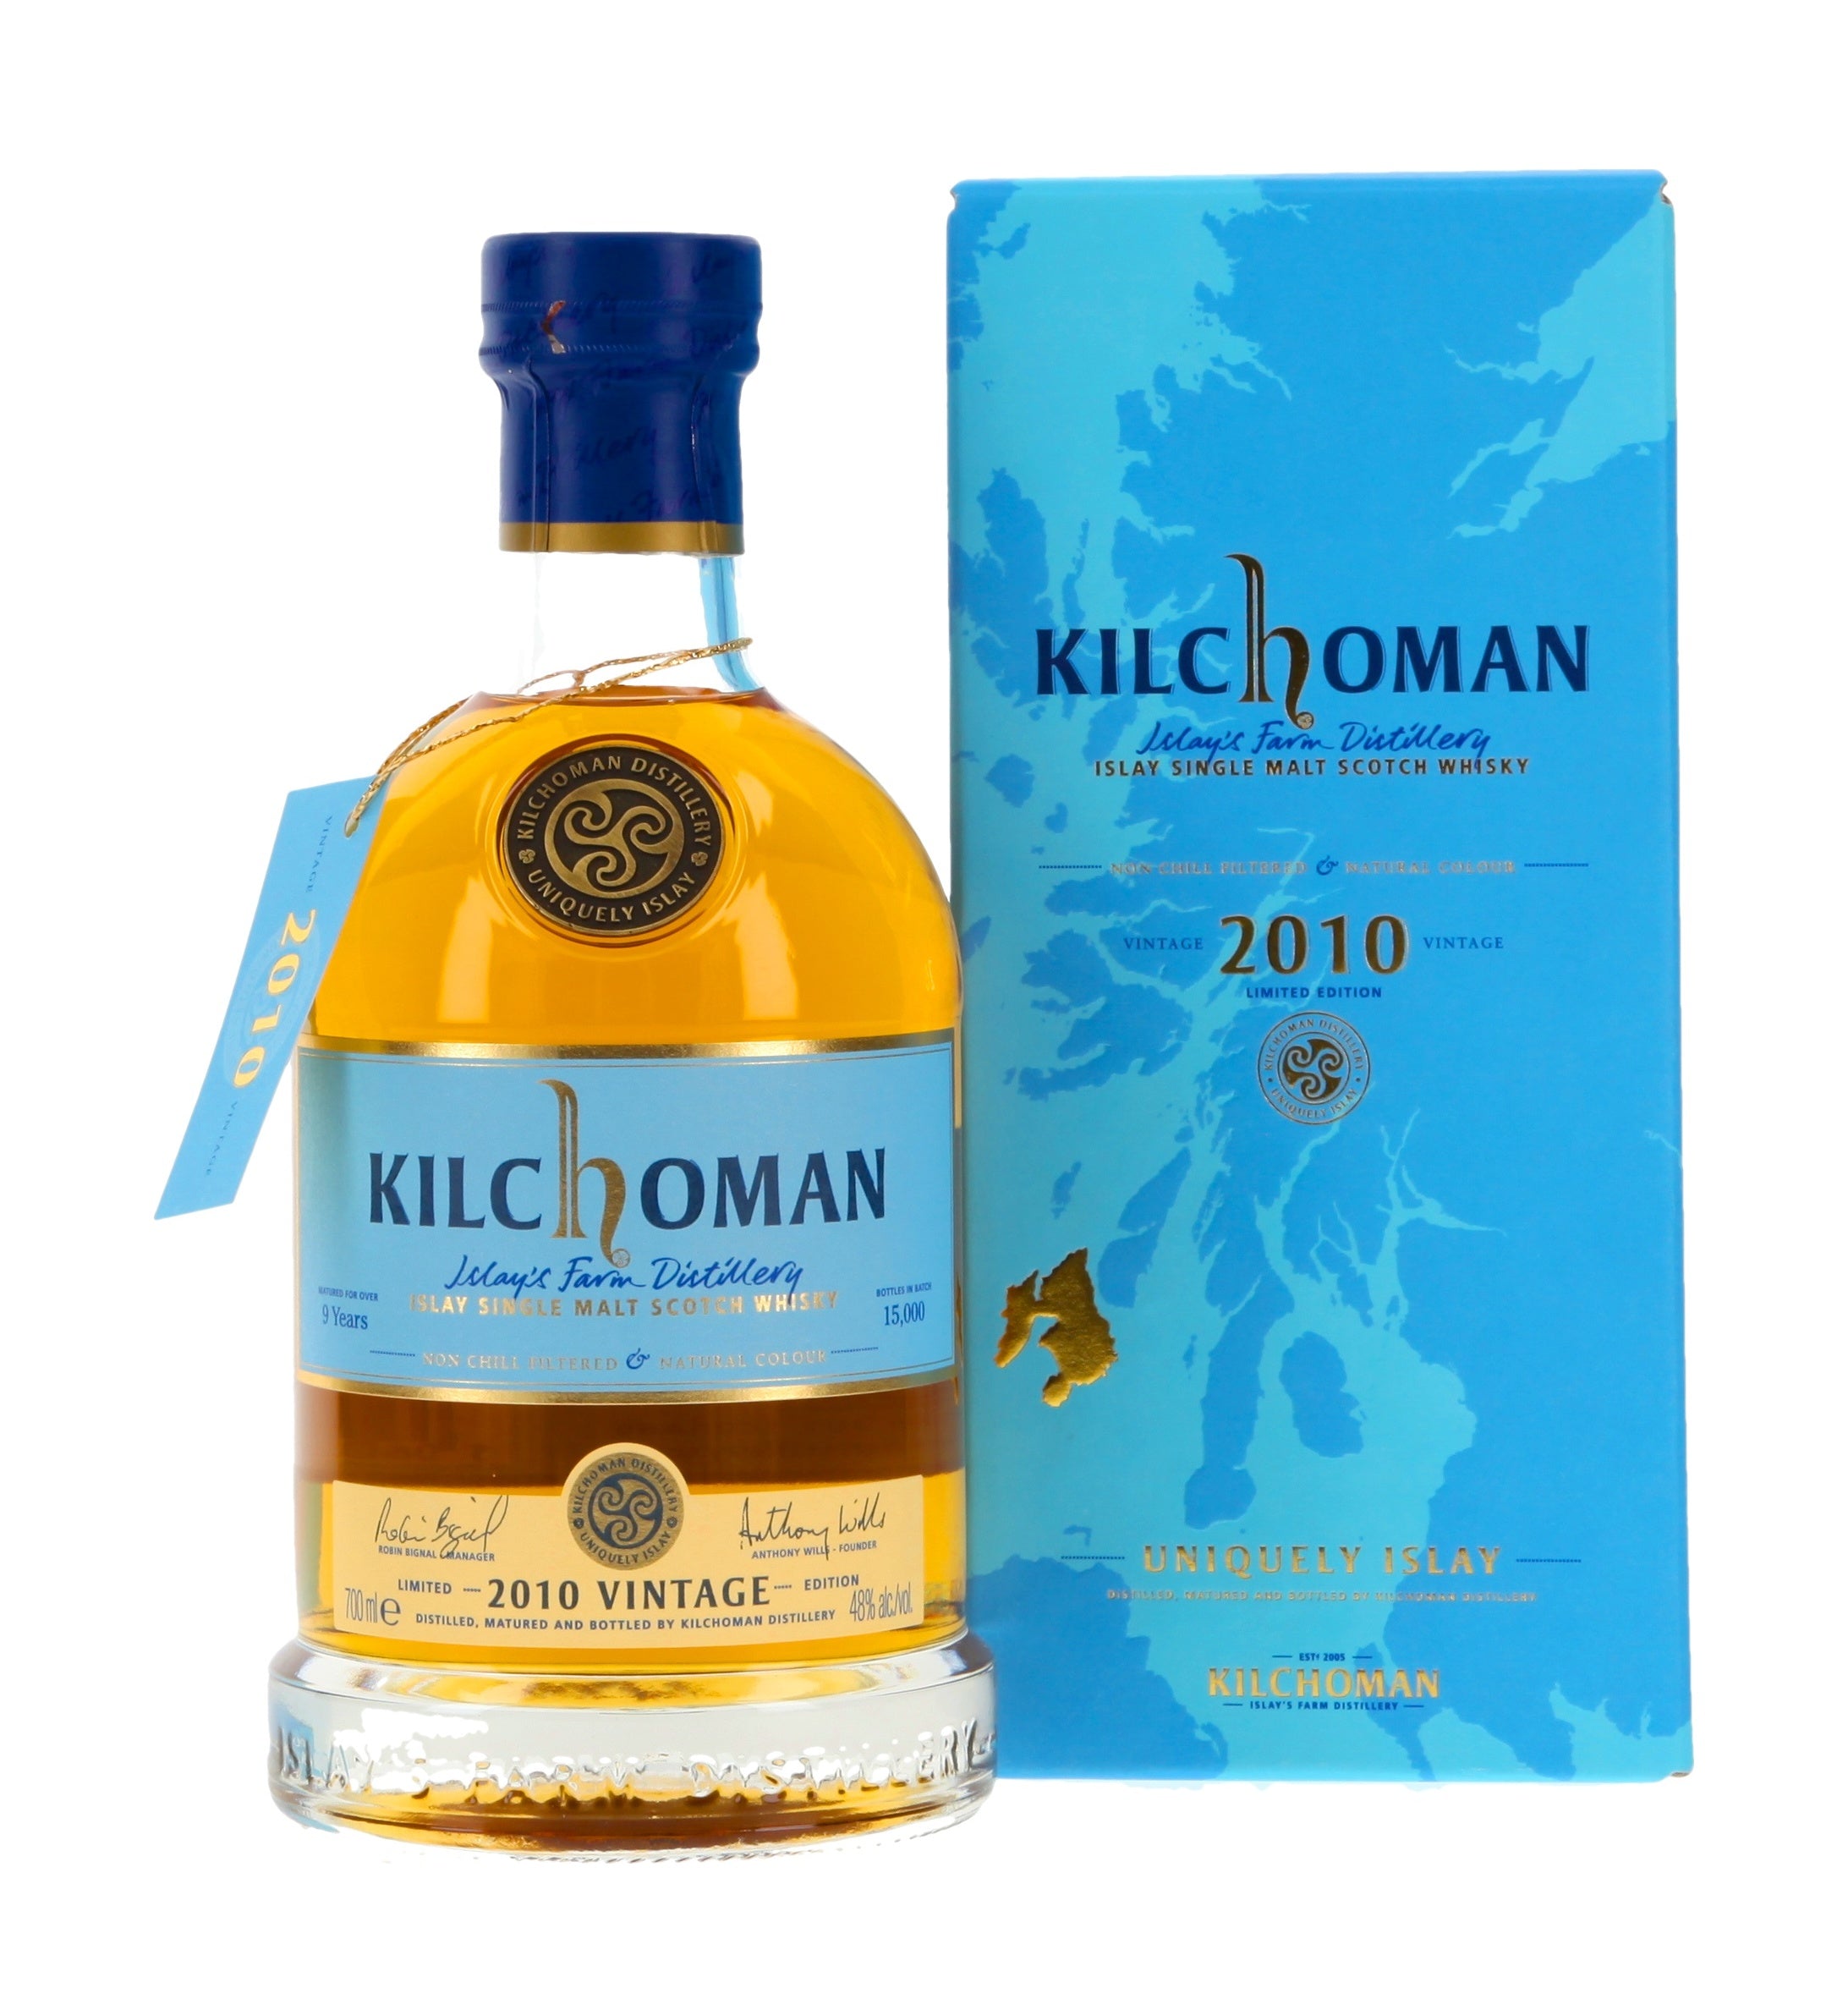 Kilchoman Islay Single Malt Scotch Whisky 2010 Vintage 9 Year Old